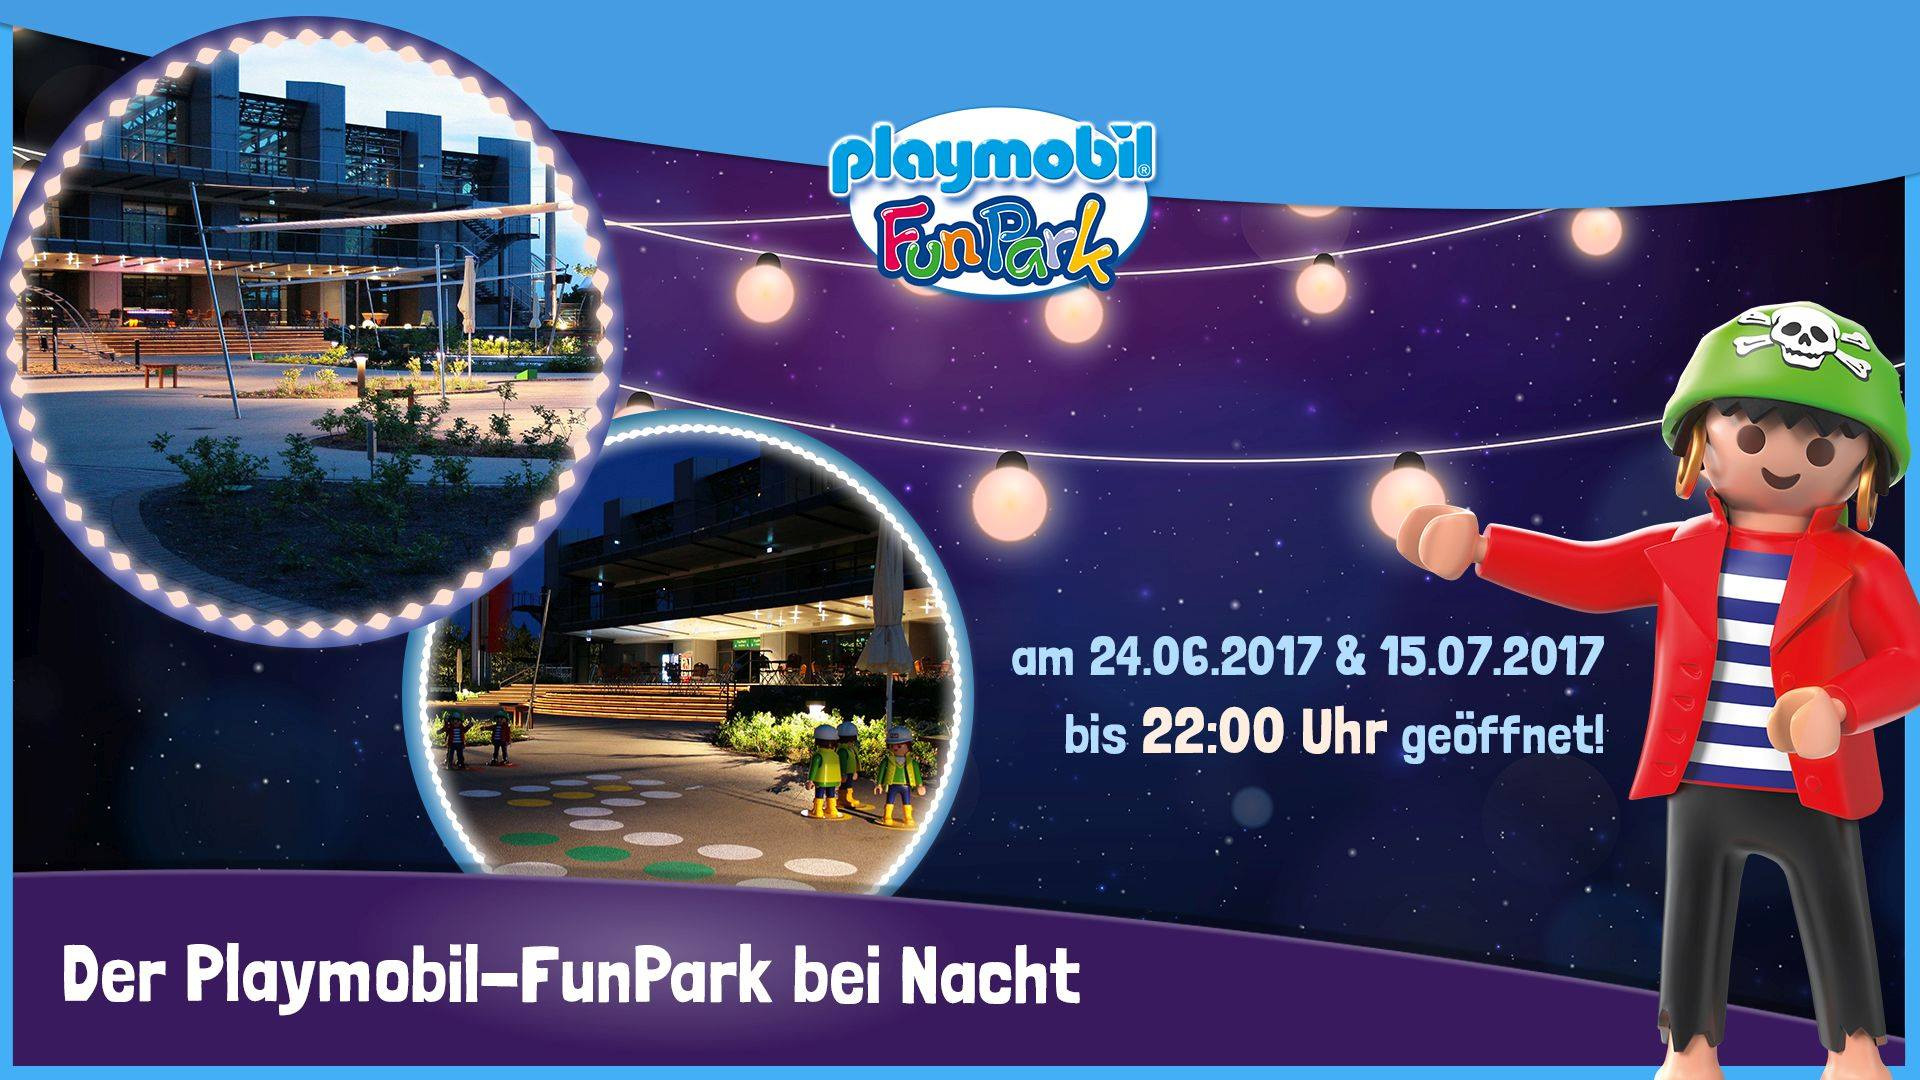 PLAYMOBIL-FunPark bei Nacht